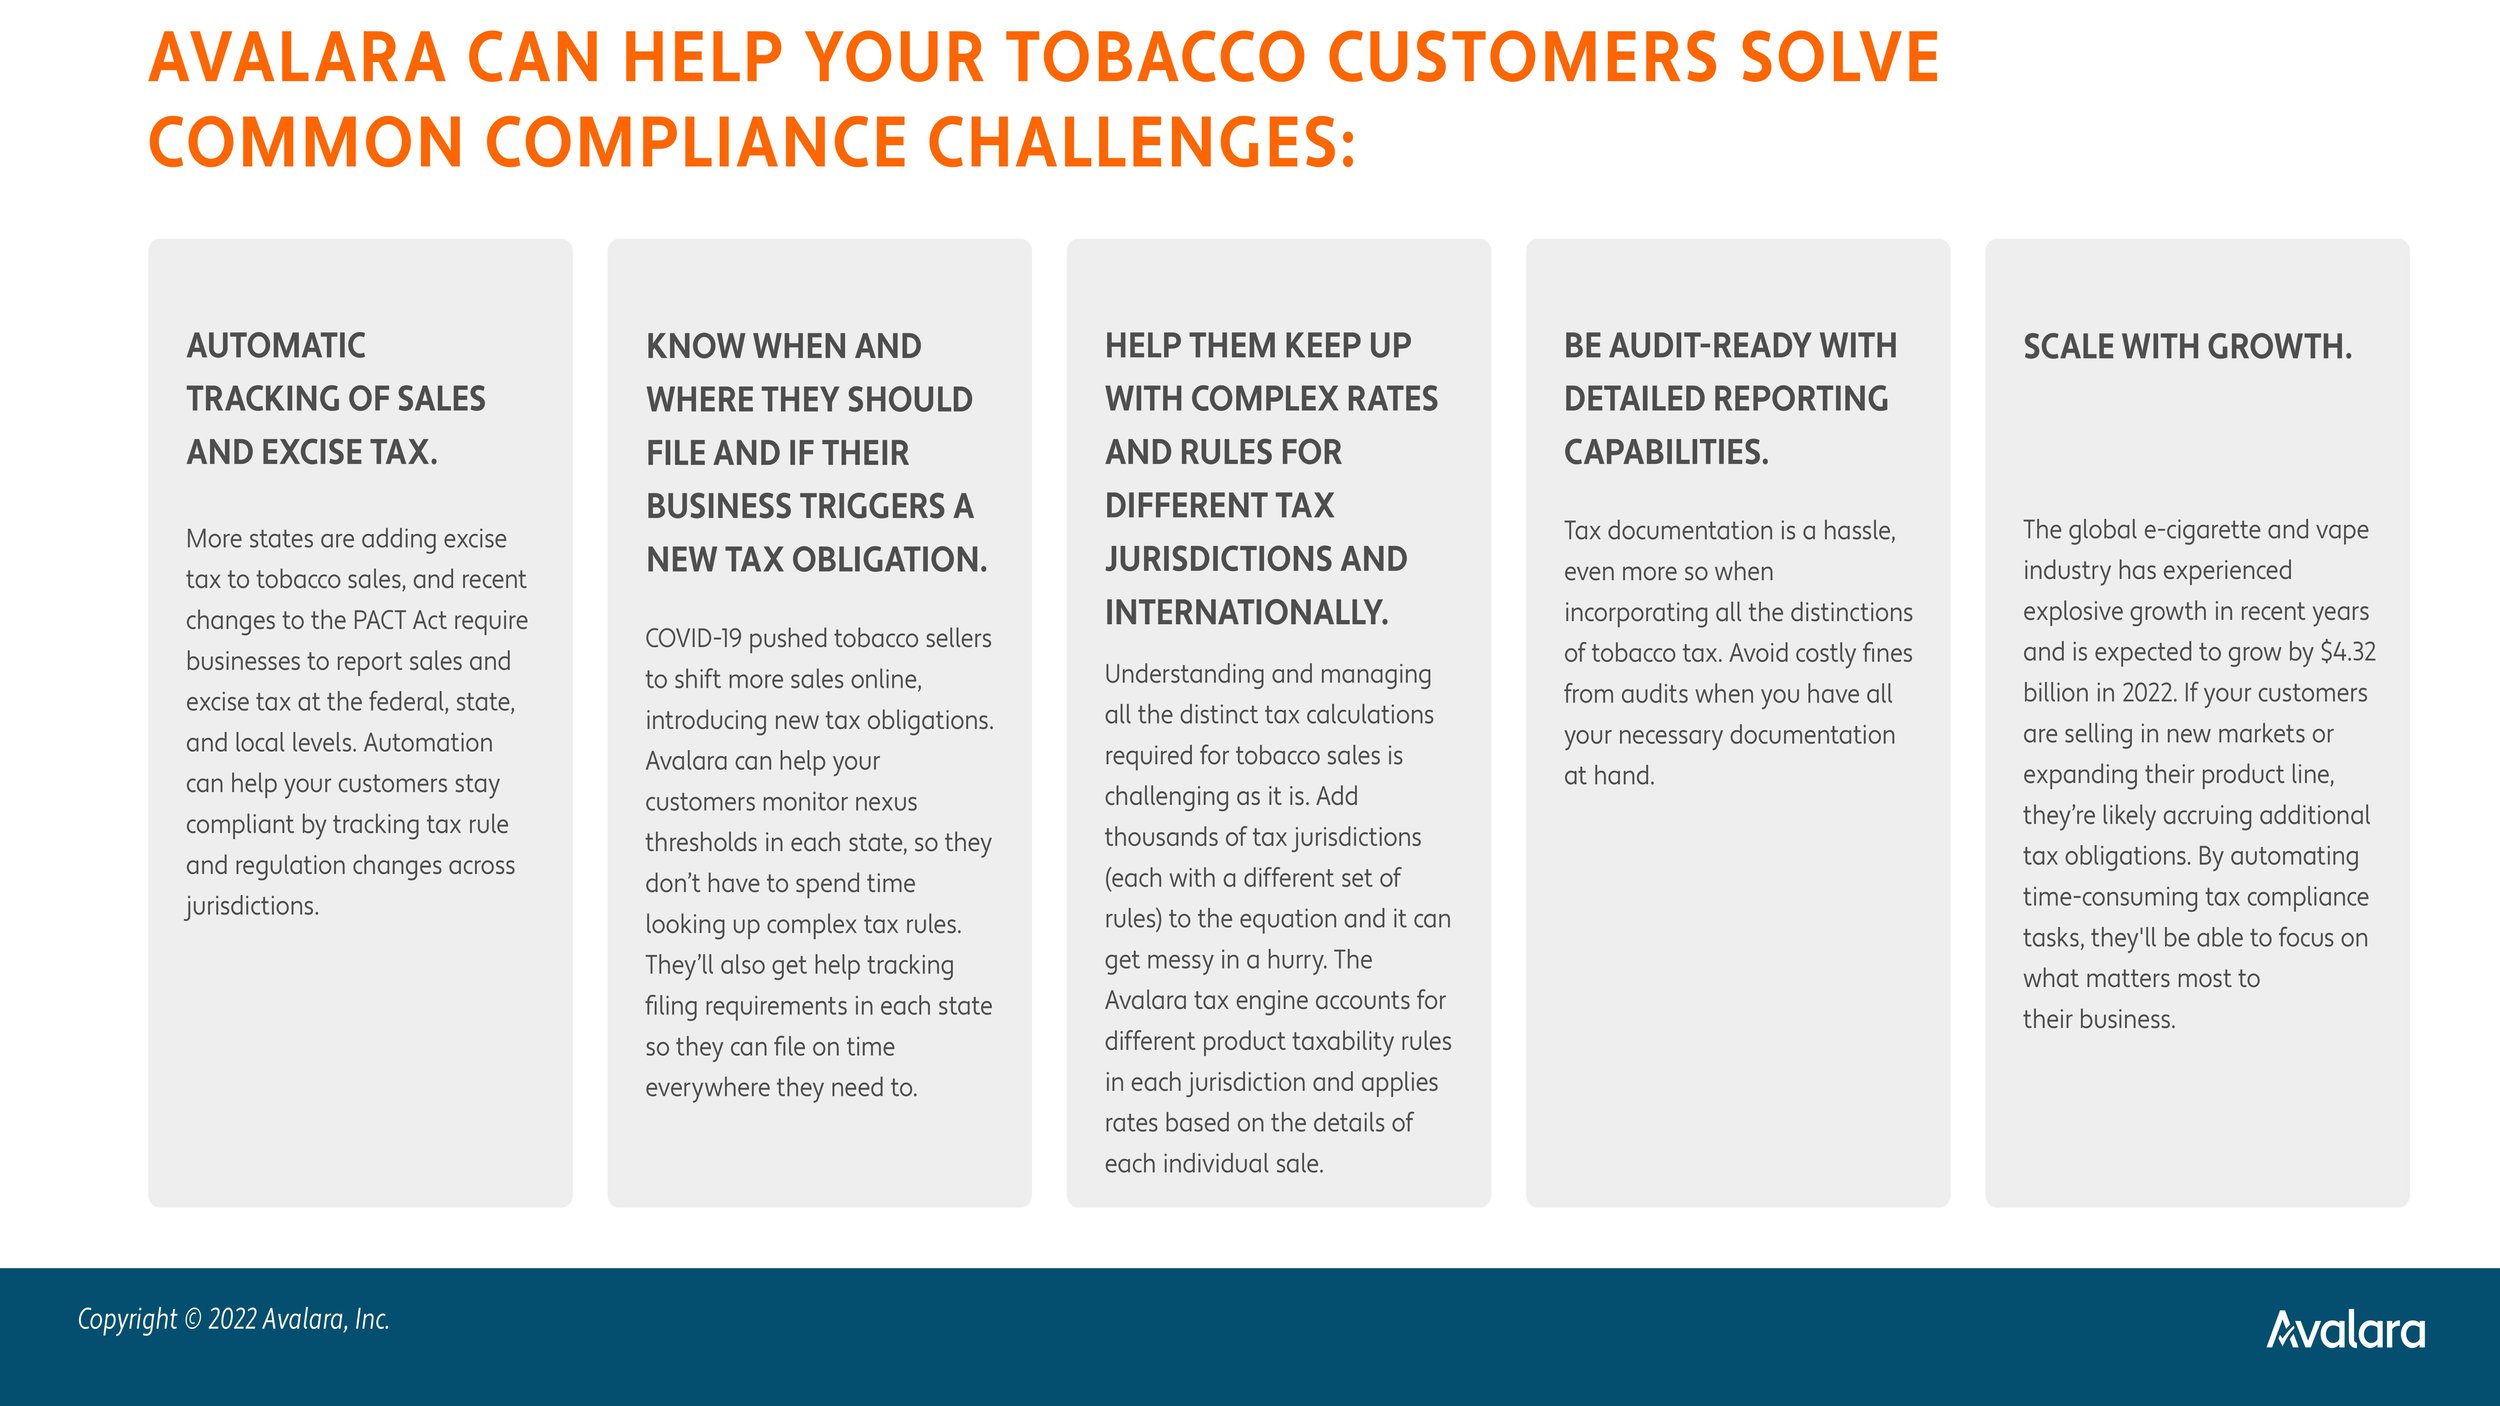 Avalara_Tobacco_Campaign Guide_2022-4.jpg